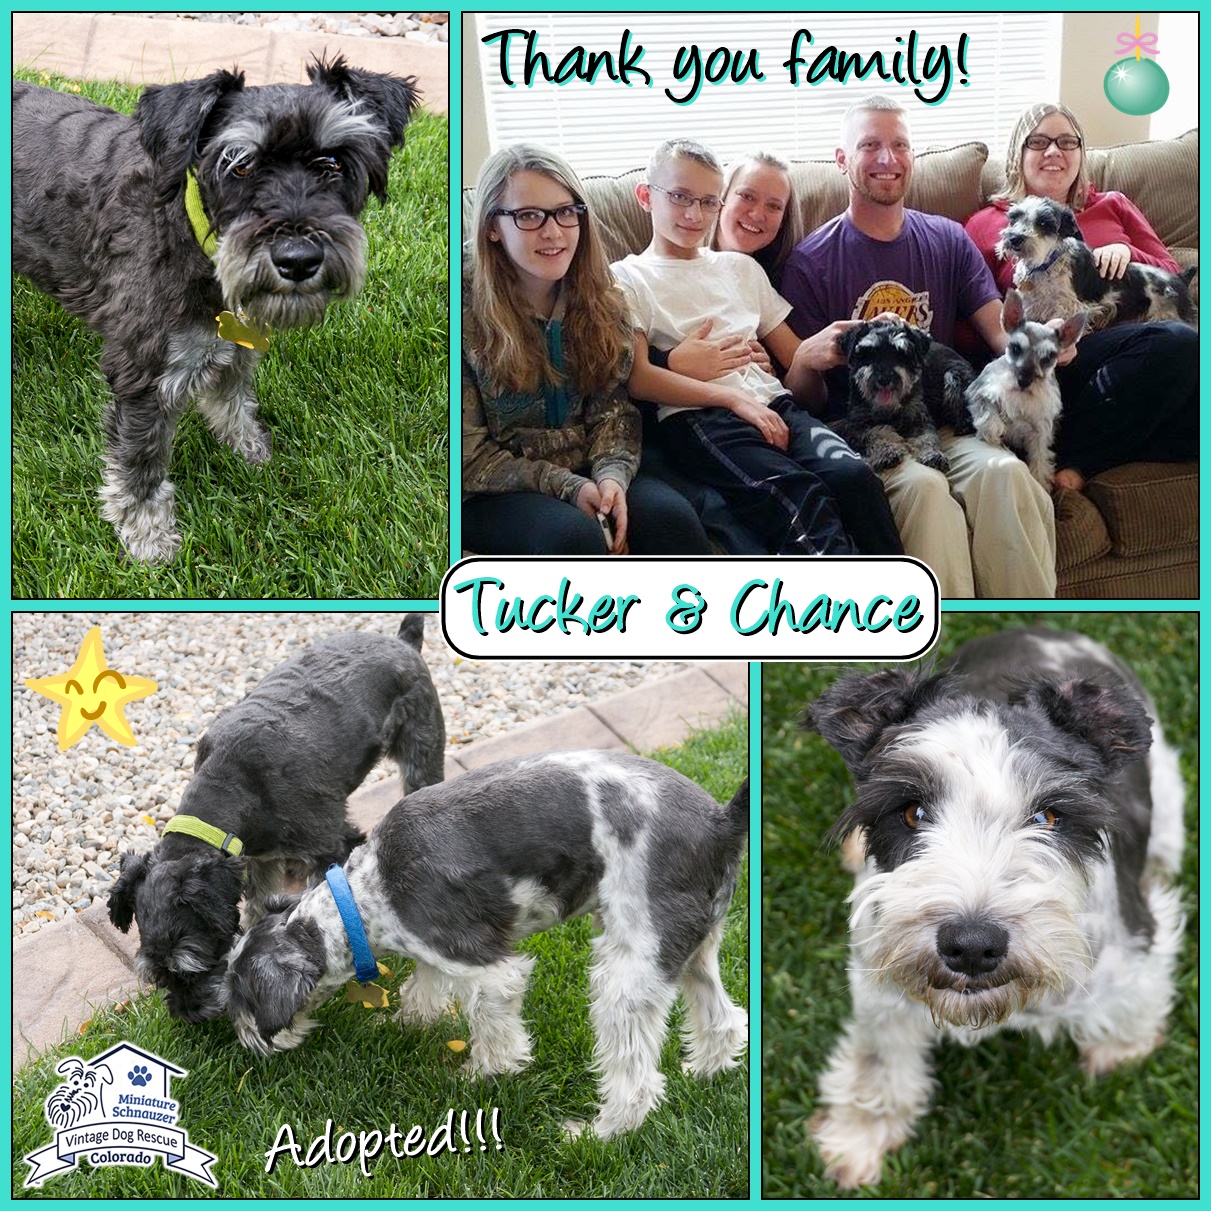 Tucker & Chance (Mini Schnauzers adopted)